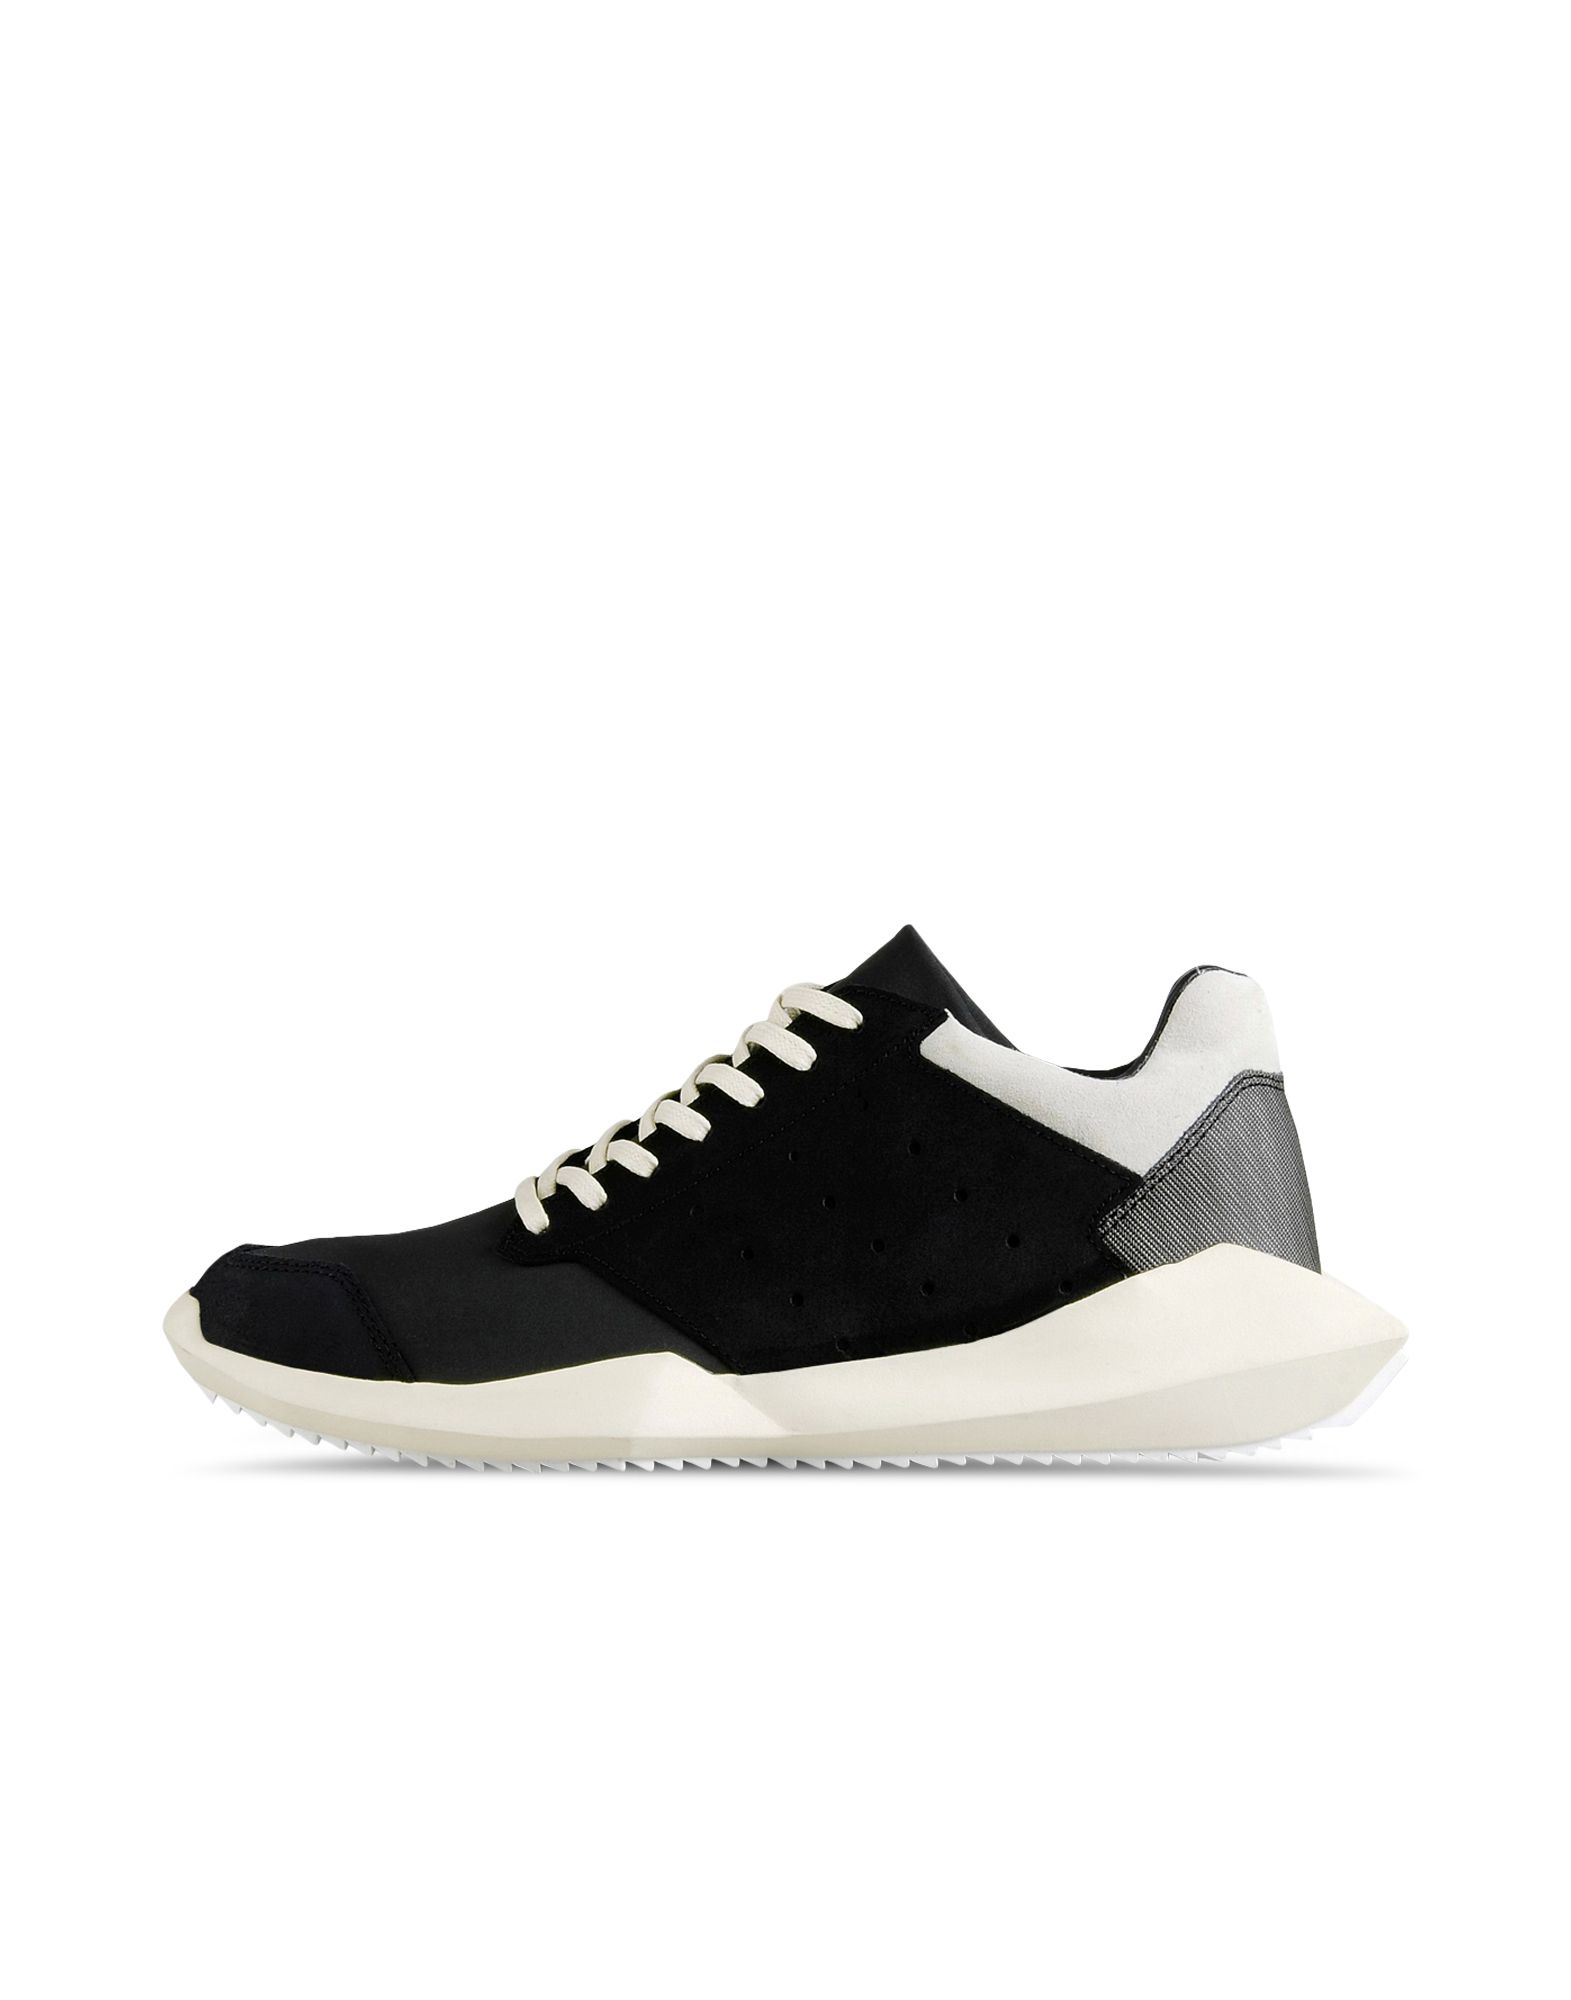 Sneakers Adidas X Rick Owens Tech Runner for Women | Online Official Store